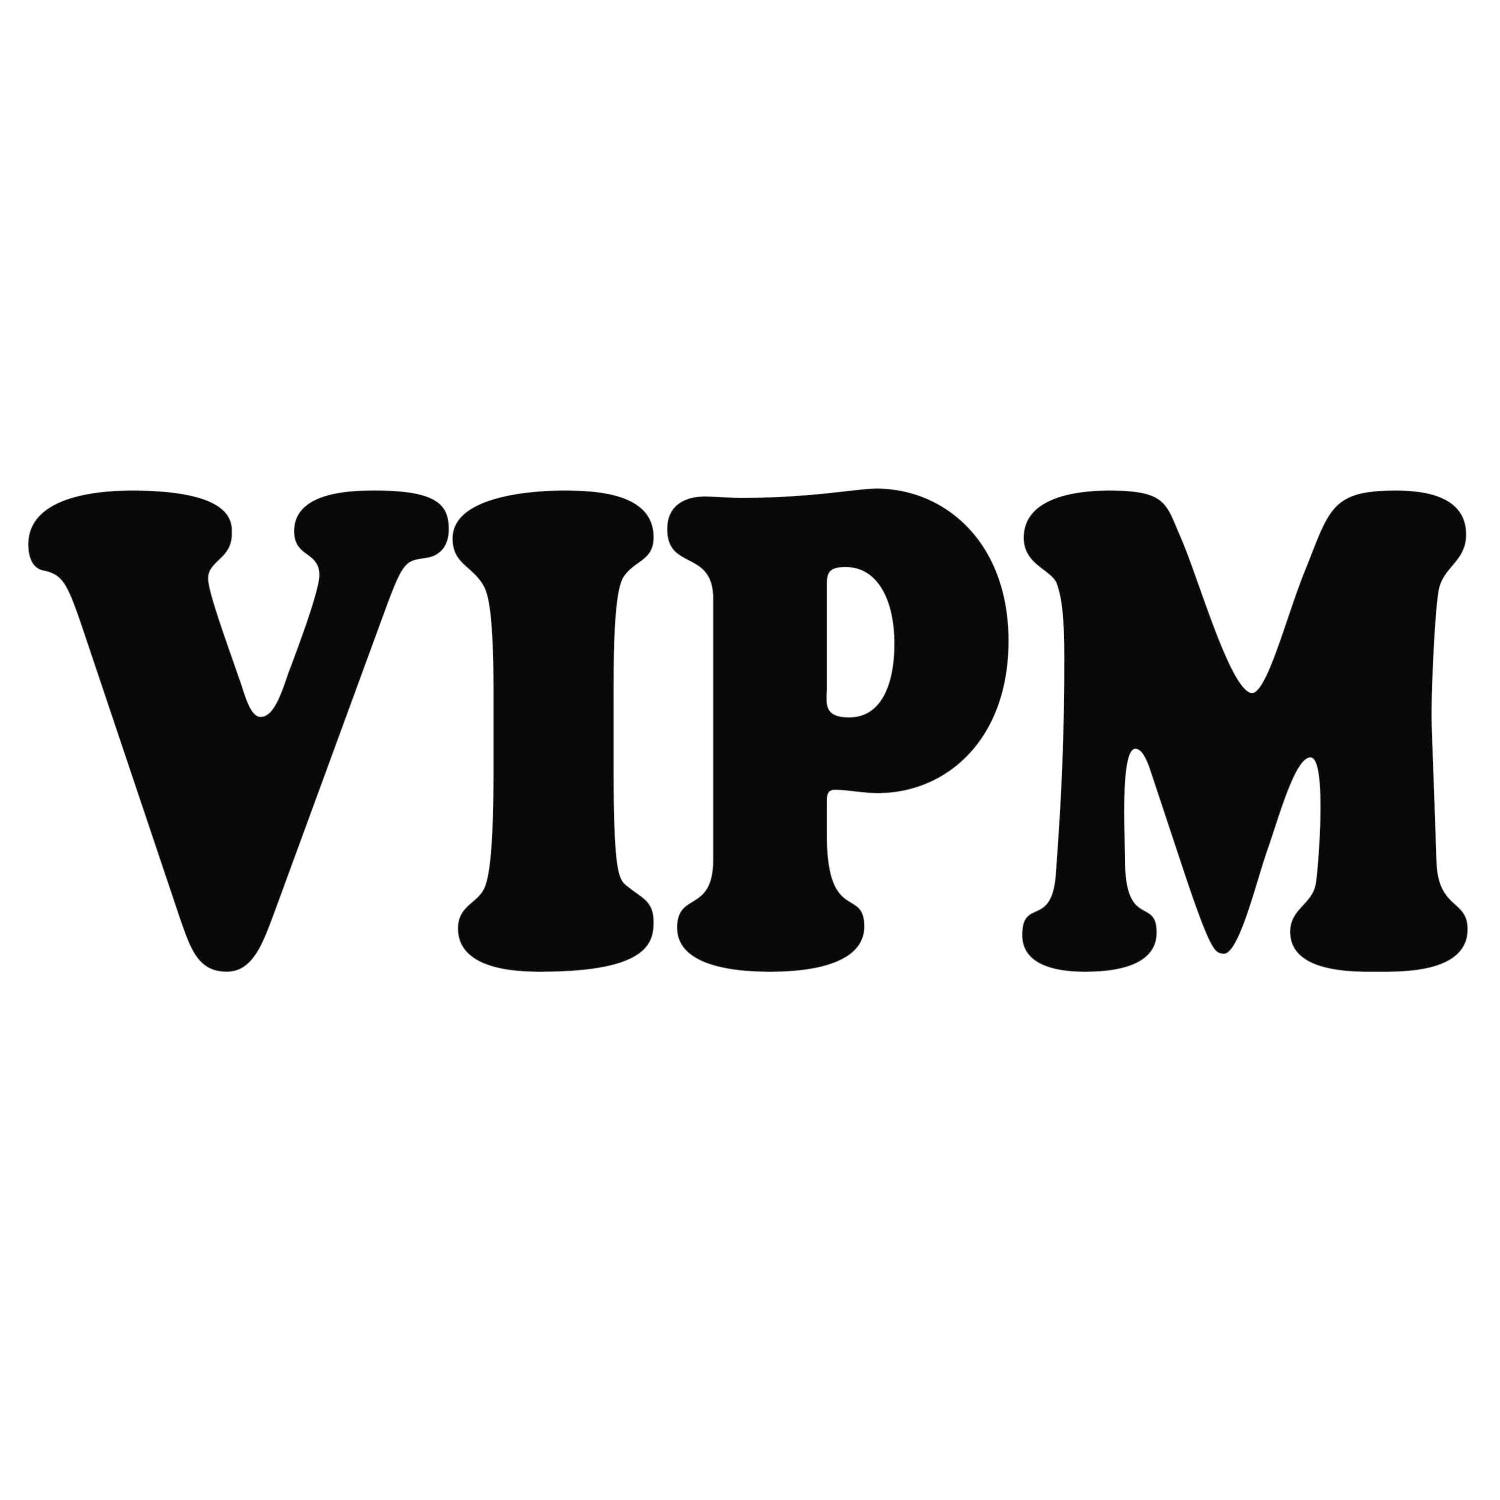 VIPM